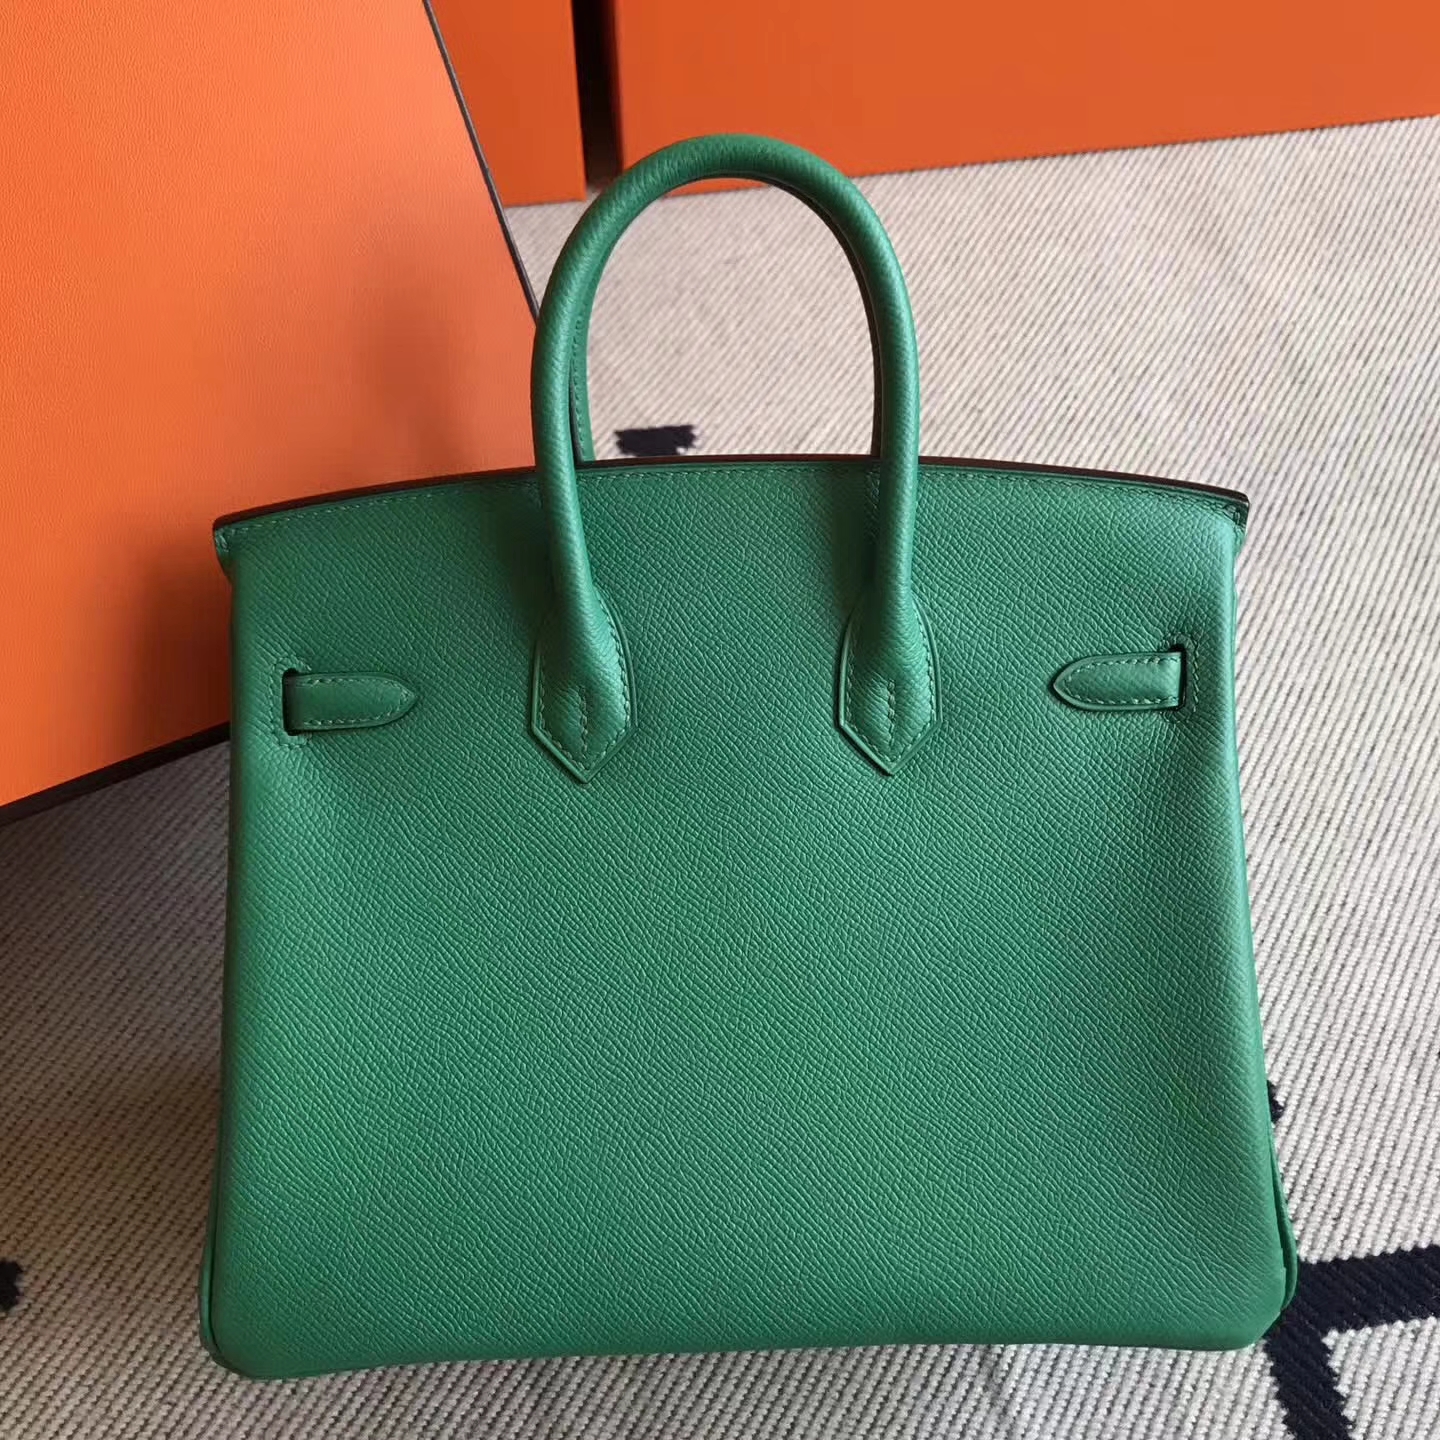 New Arrival Hermes U4 New Mint Green Epsom Leather Birkin25cm Tote Bag